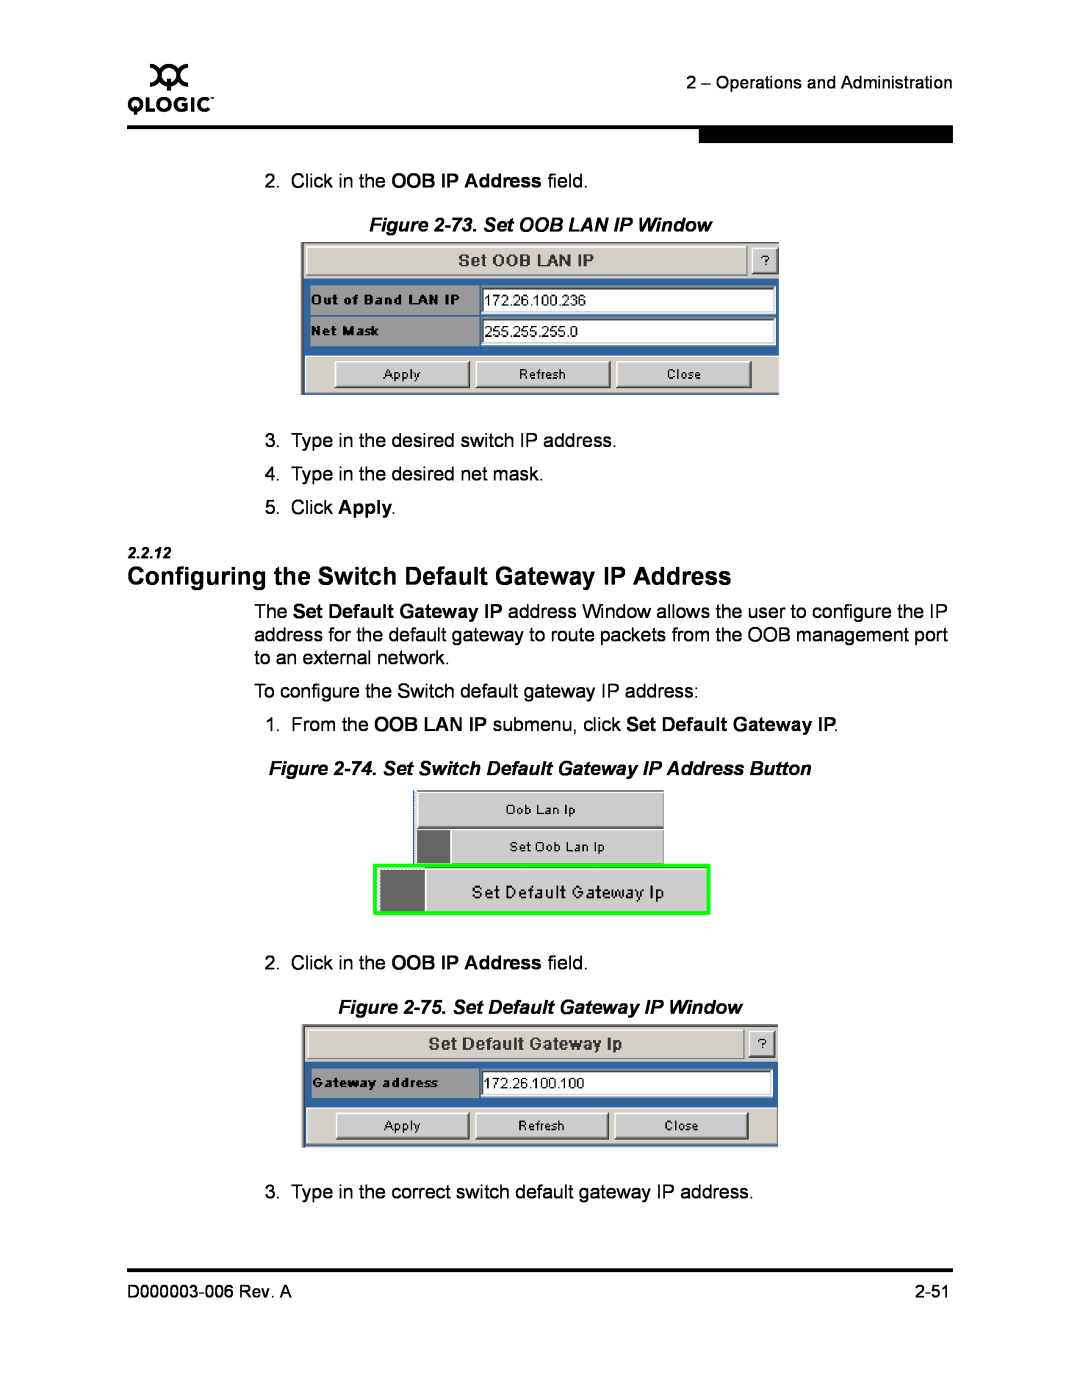 Q-Logic 9000 manual Configuring the Switch Default Gateway IP Address, 73. Set OOB LAN IP Window 